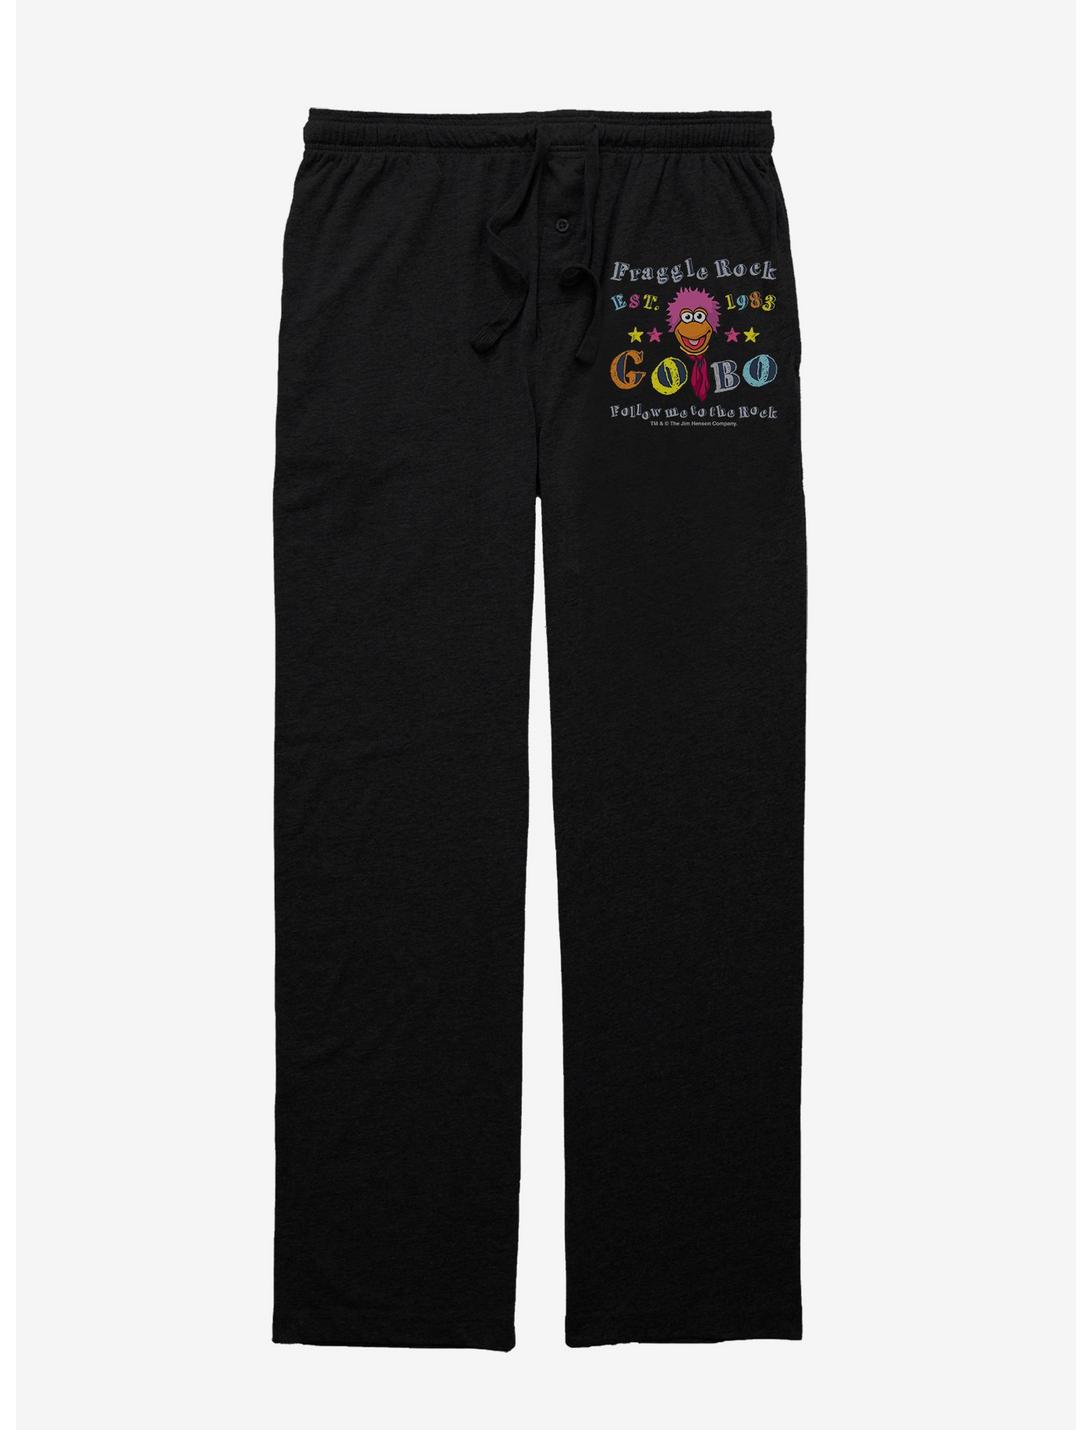 Jim Henson's Fraggle Rock Follow Me To The Rock Pajama Pants, BLACK, hi-res